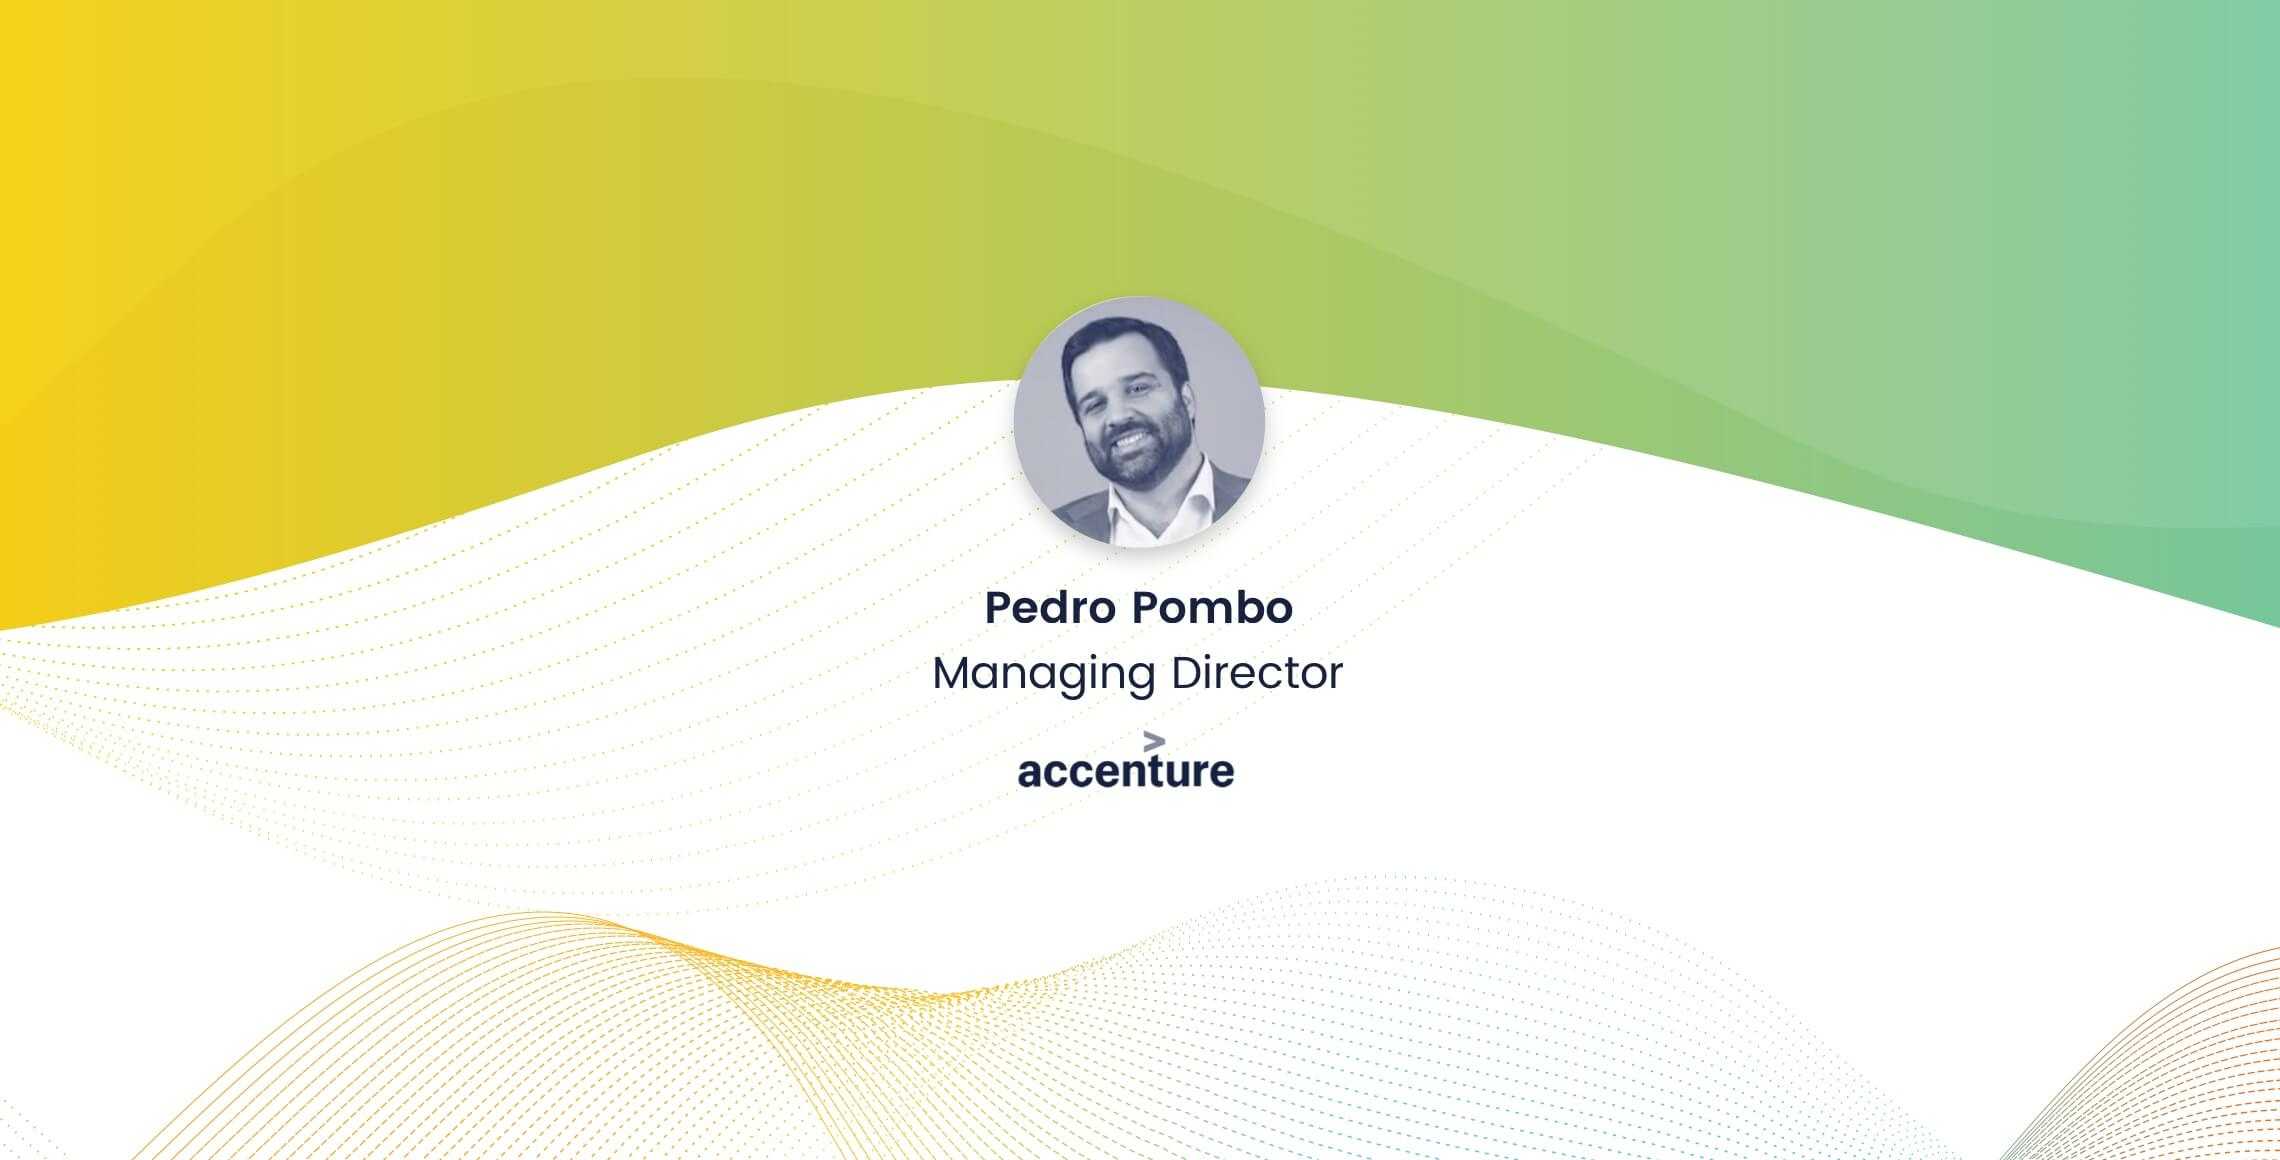 Pedro Pombo, Managing Director, Accenture